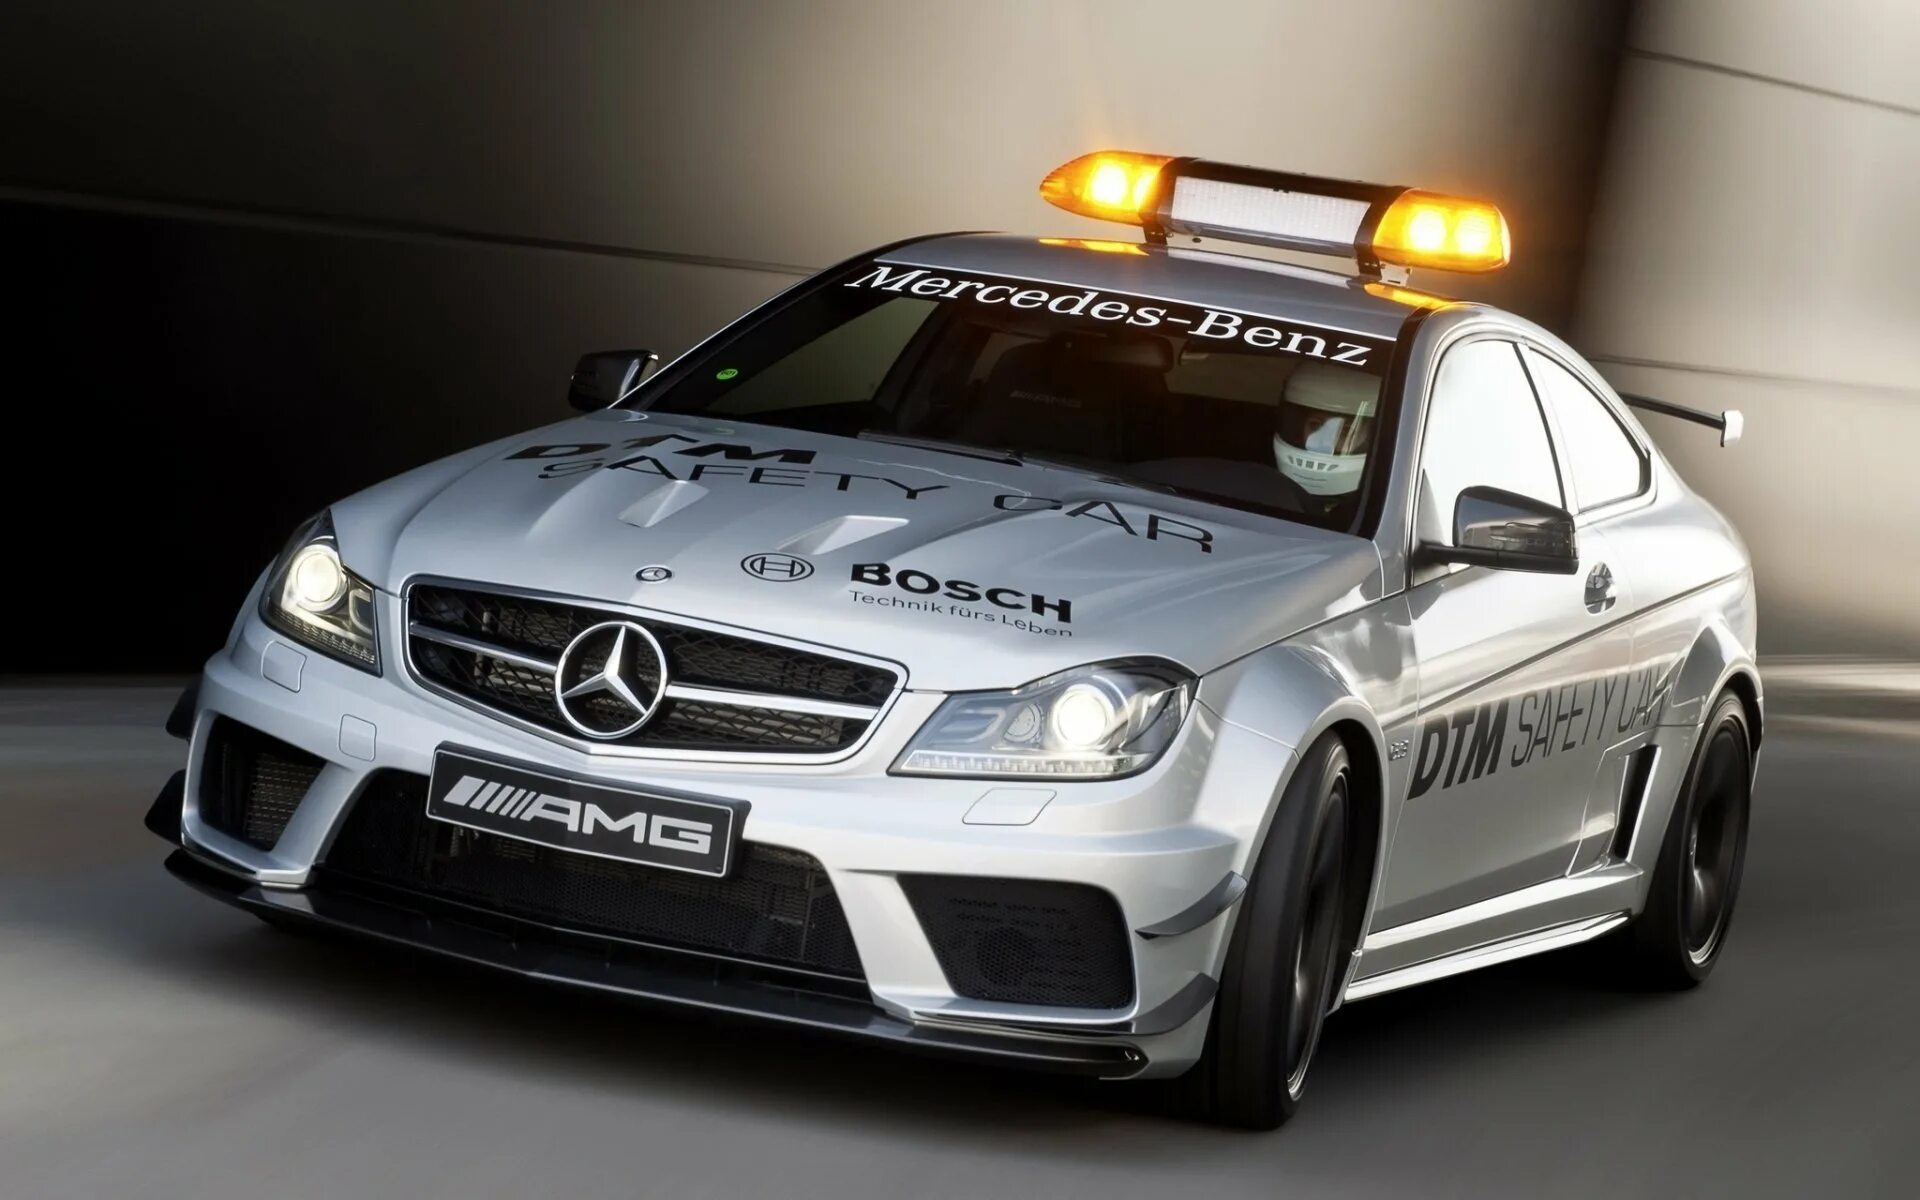 My e cars. Mercedes c63 AMG полицейский. Mercedes-Benz c63 AMG DTM. Mercedes Benz AMG c63 Series DTM. Мерседес c 63 AMG полицейский.